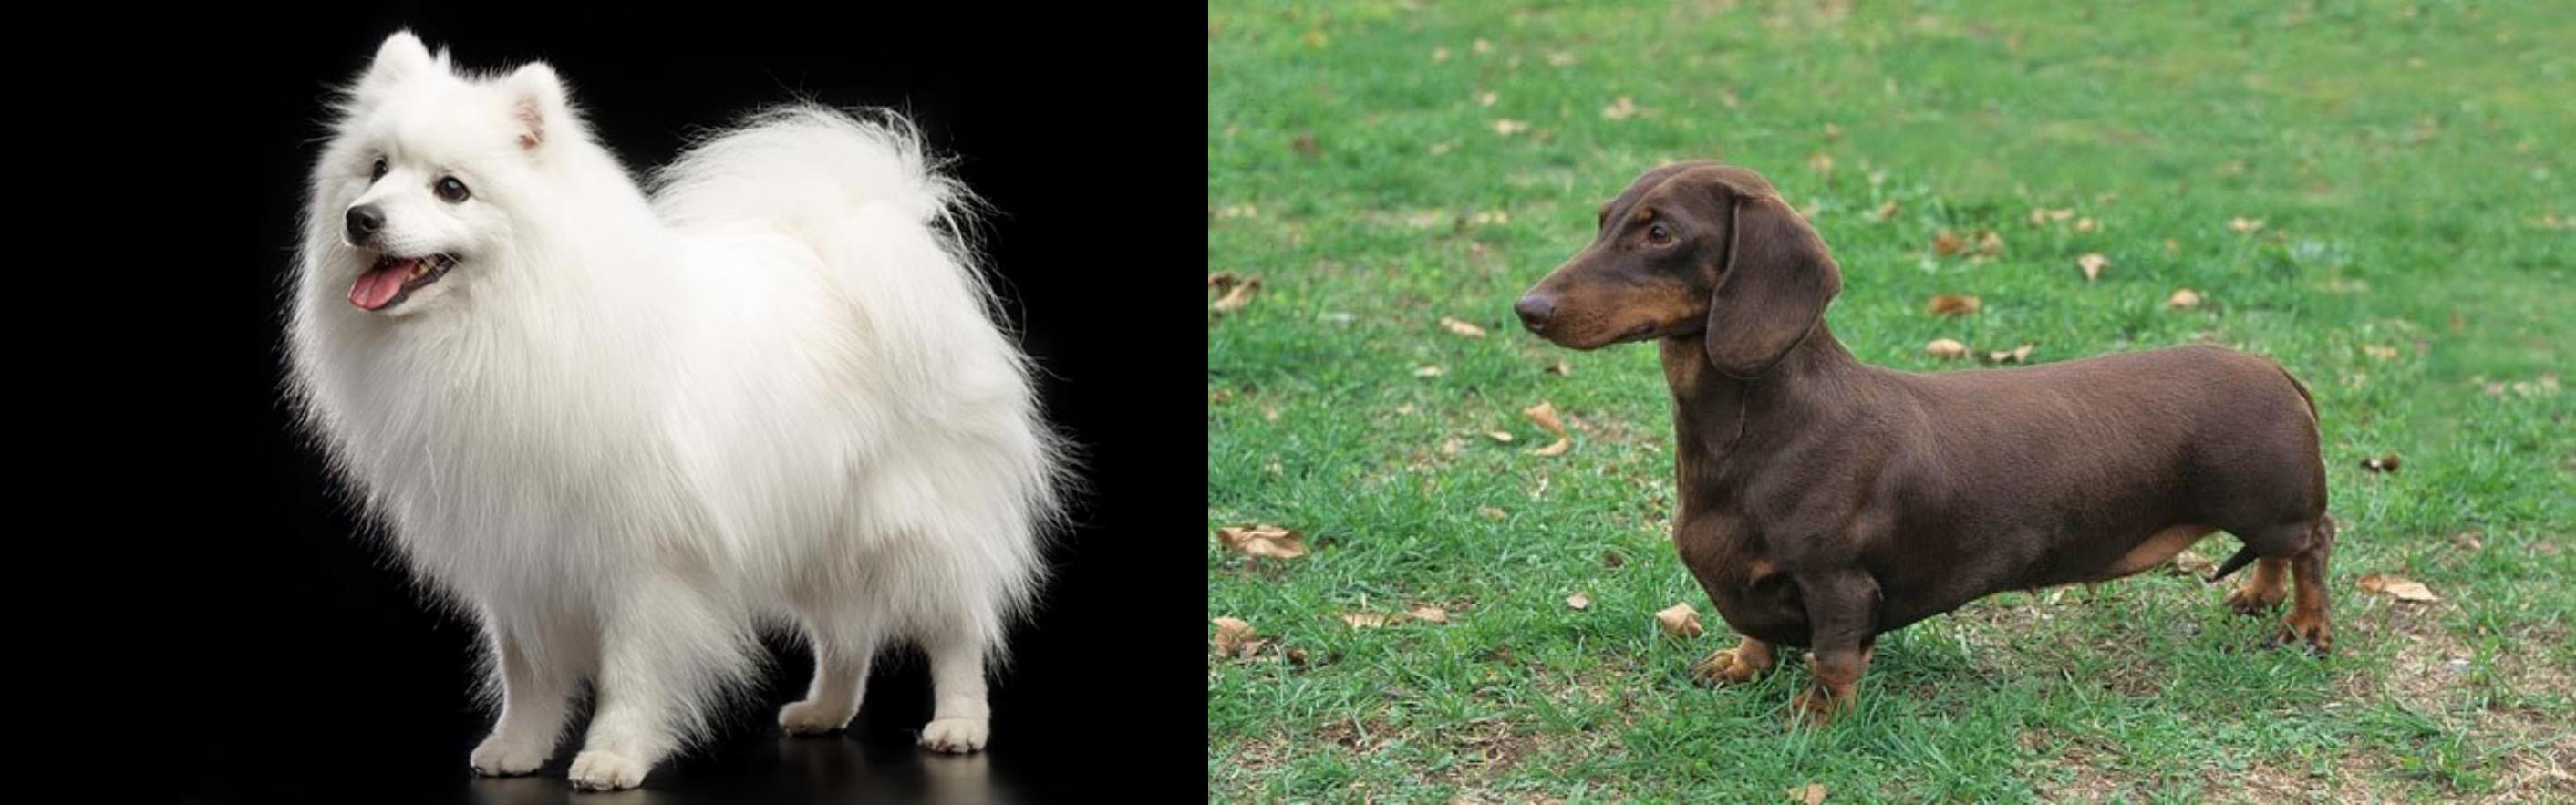 Japanese Spitz Vs Dachshund Breed Comparison Mydogbreeds